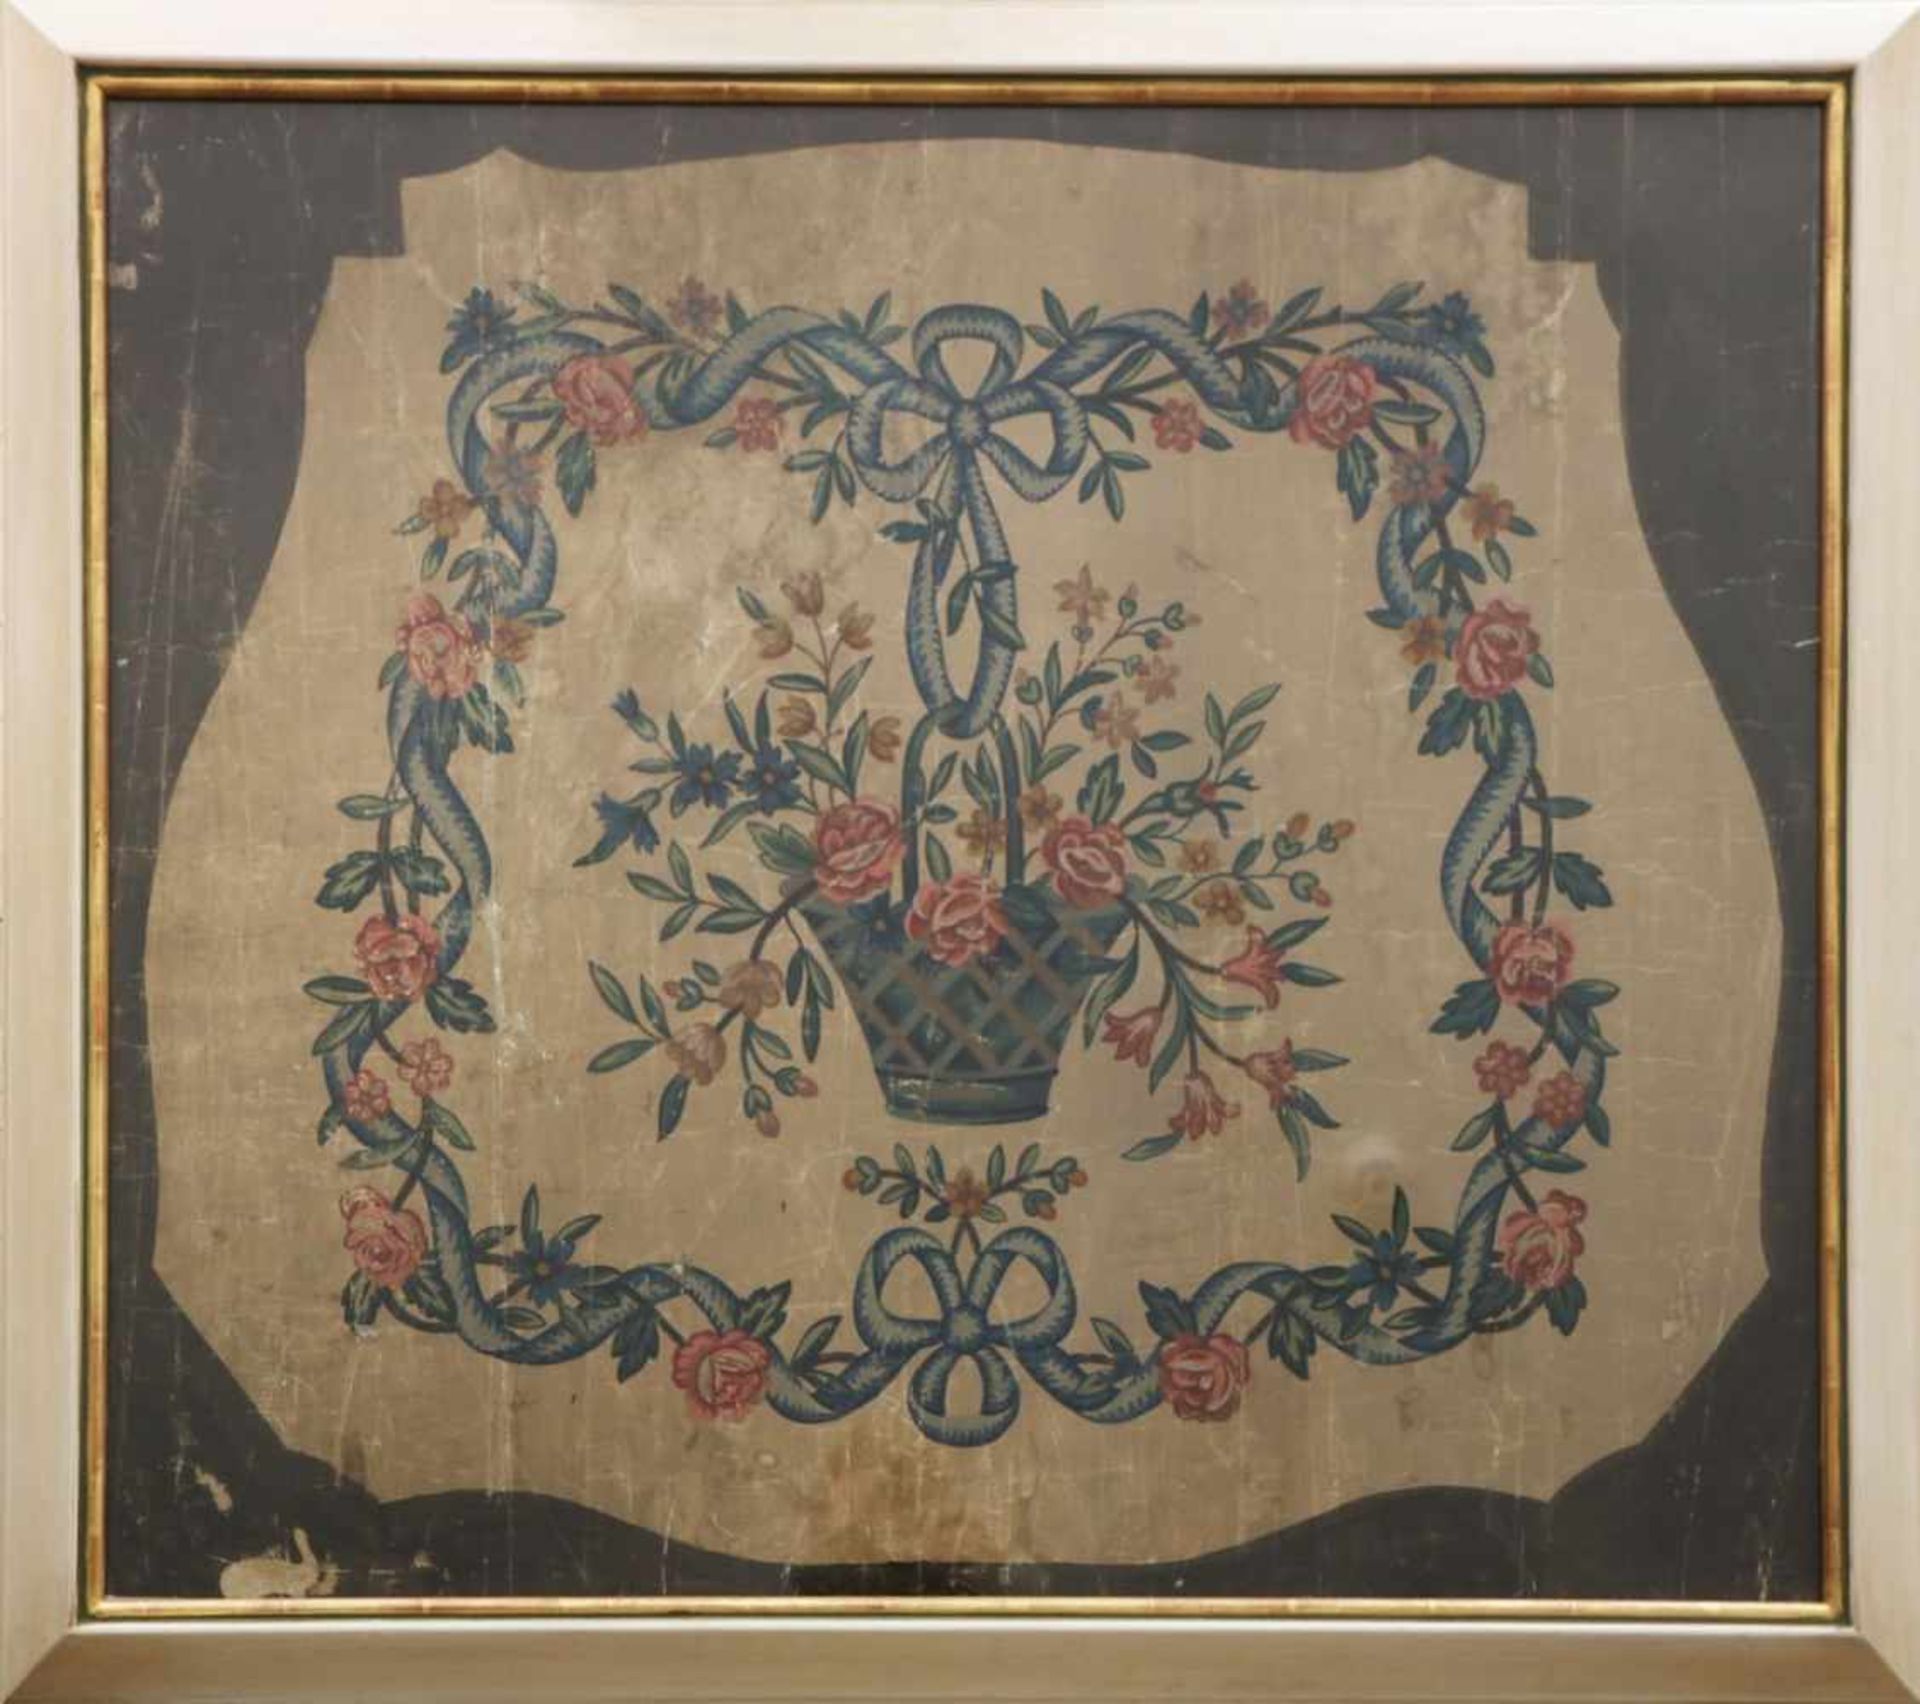 Dekorative Supraporten-MalereiTemperafarbe auf Papier, mit floralen Ornamenten, wohl um 1900, ca.